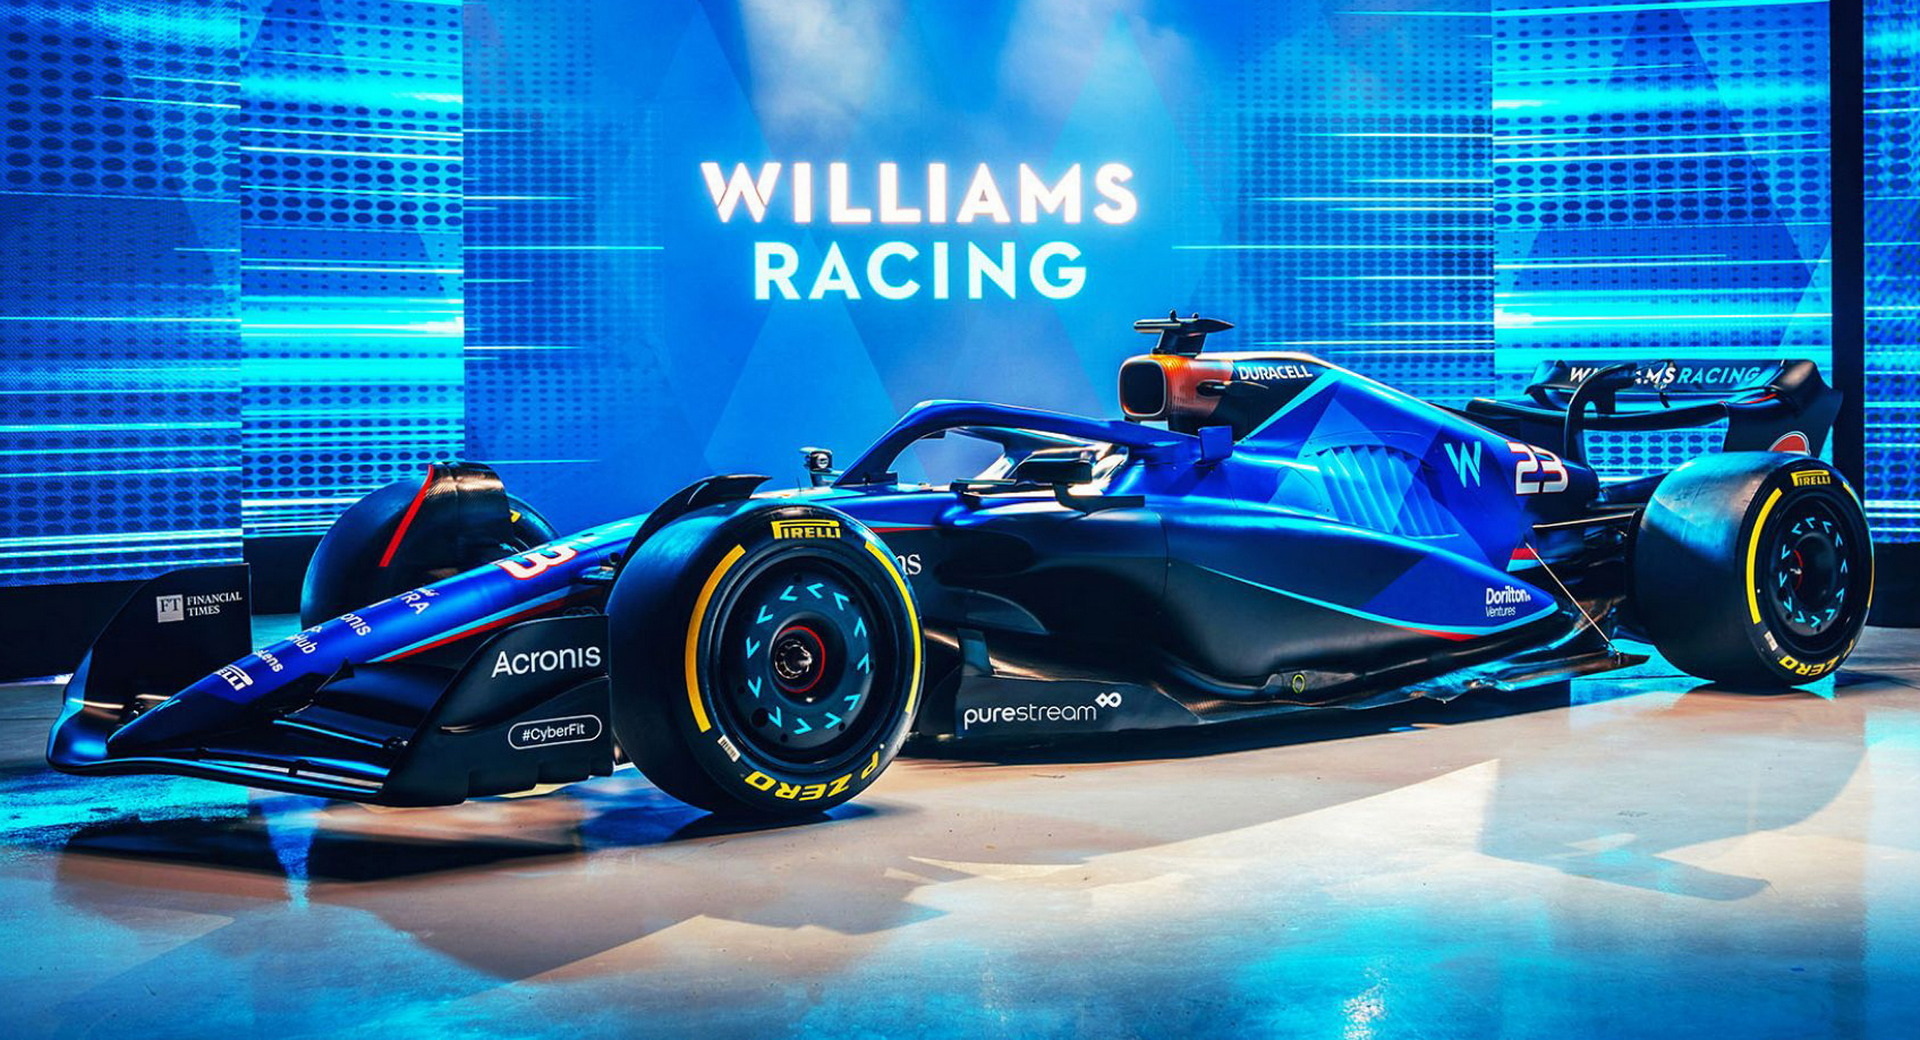 Williams Reveals A Familiar Livery For Their 2023 F1 Car The Fw45